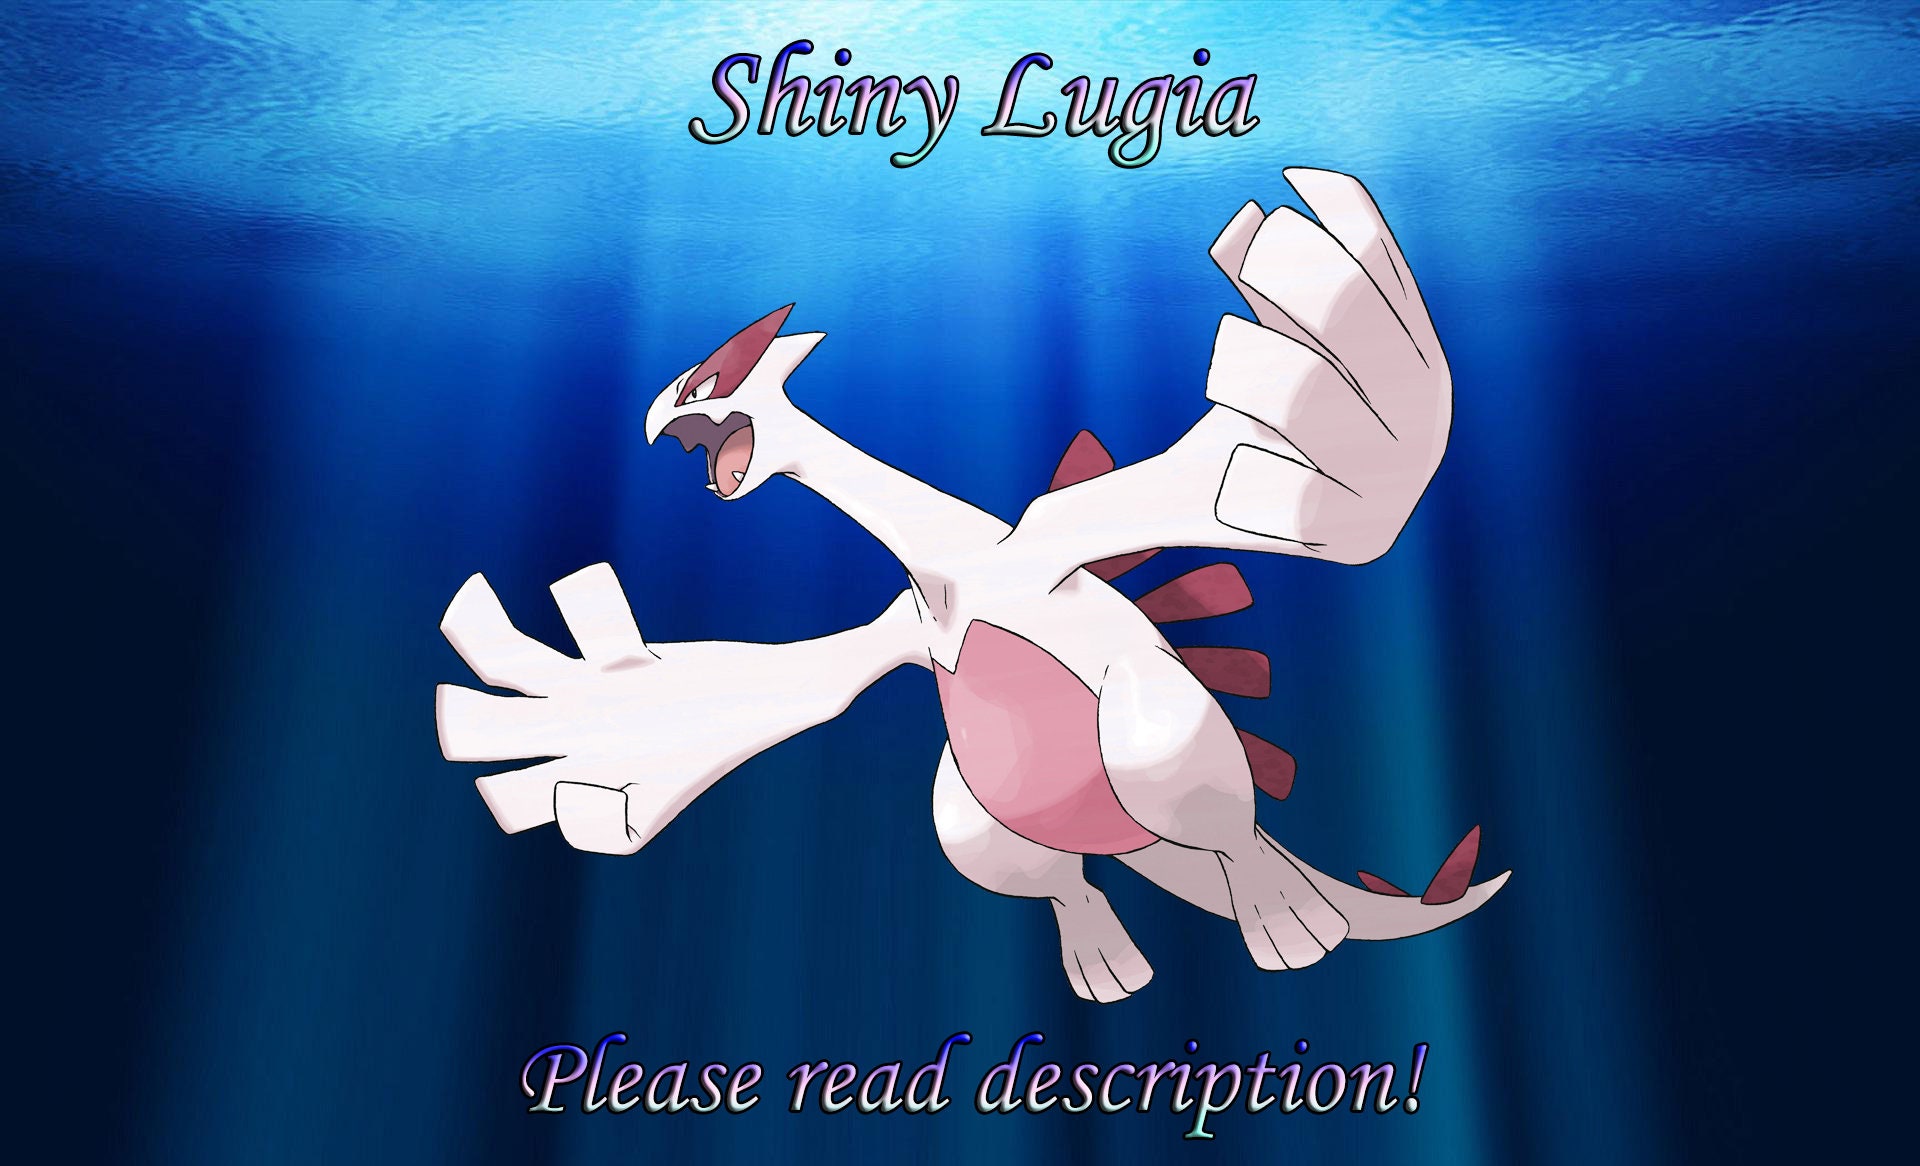 Can You Catch Shiny Lugia in Pokemon GO?